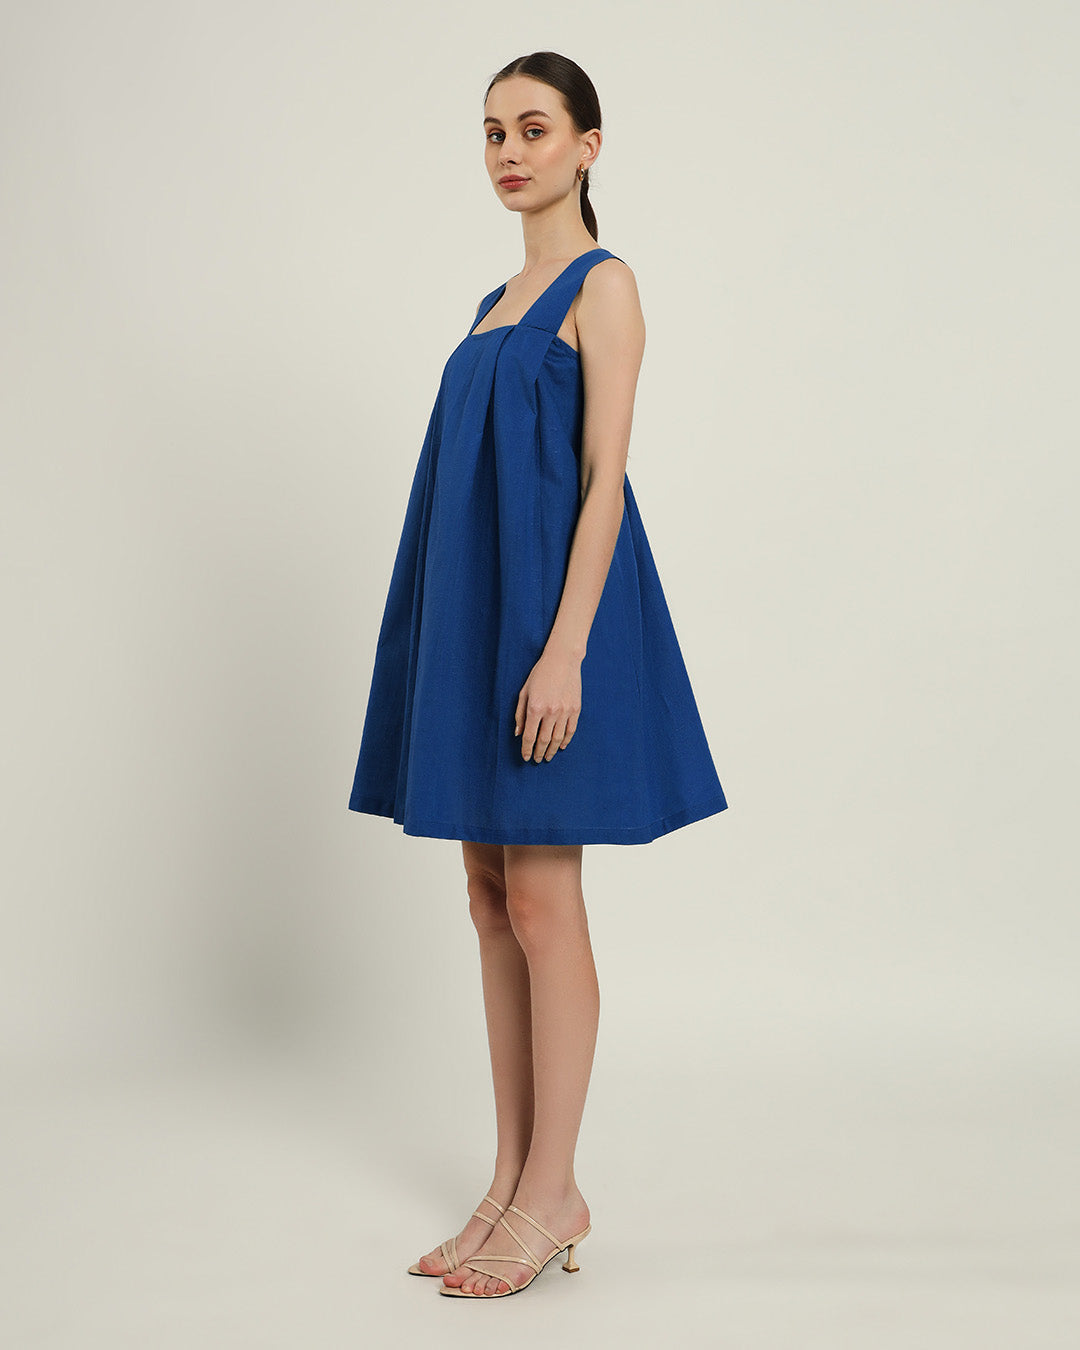 The Larissa Cobalt Dress